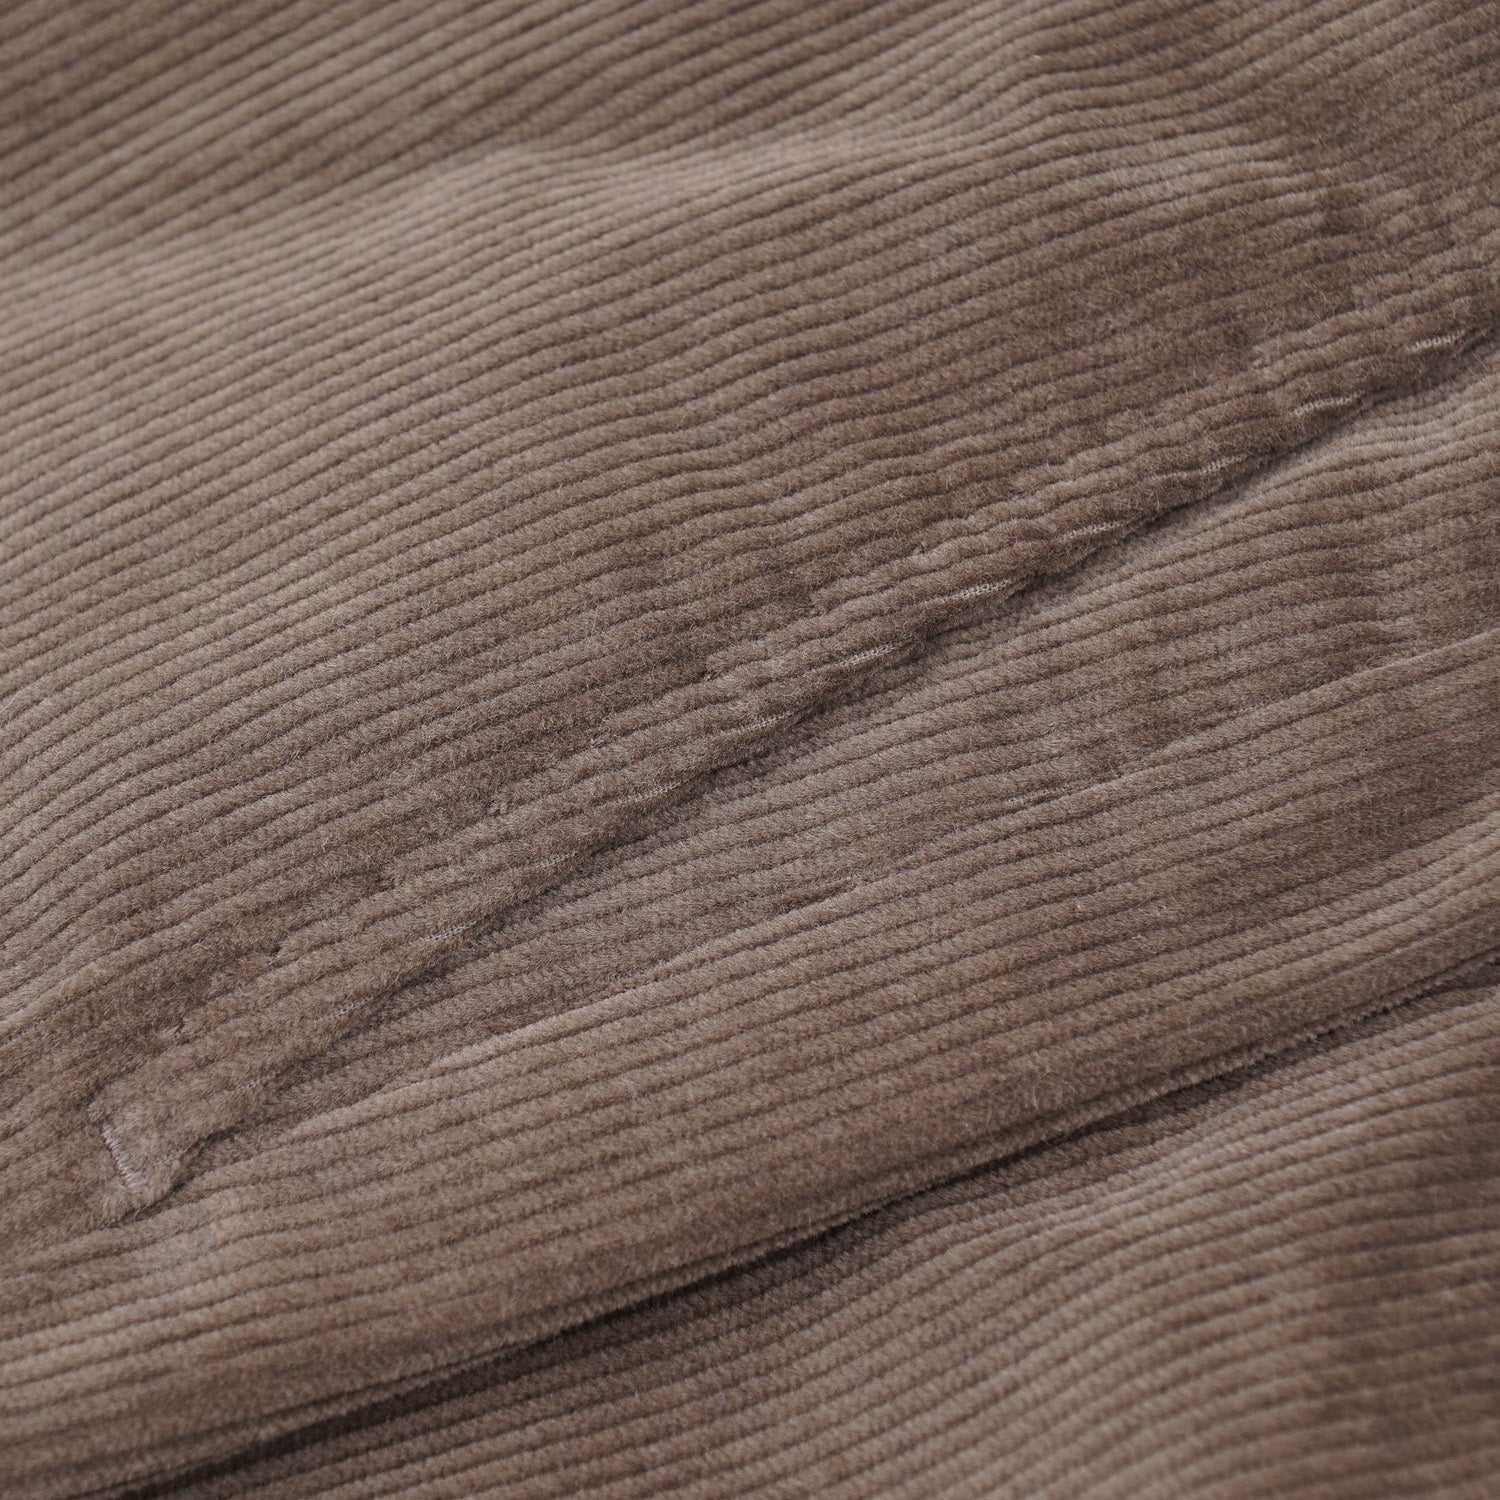 Isaia 'Sanita' Corduroy Cotton Dress Pants - Top Shelf Apparel